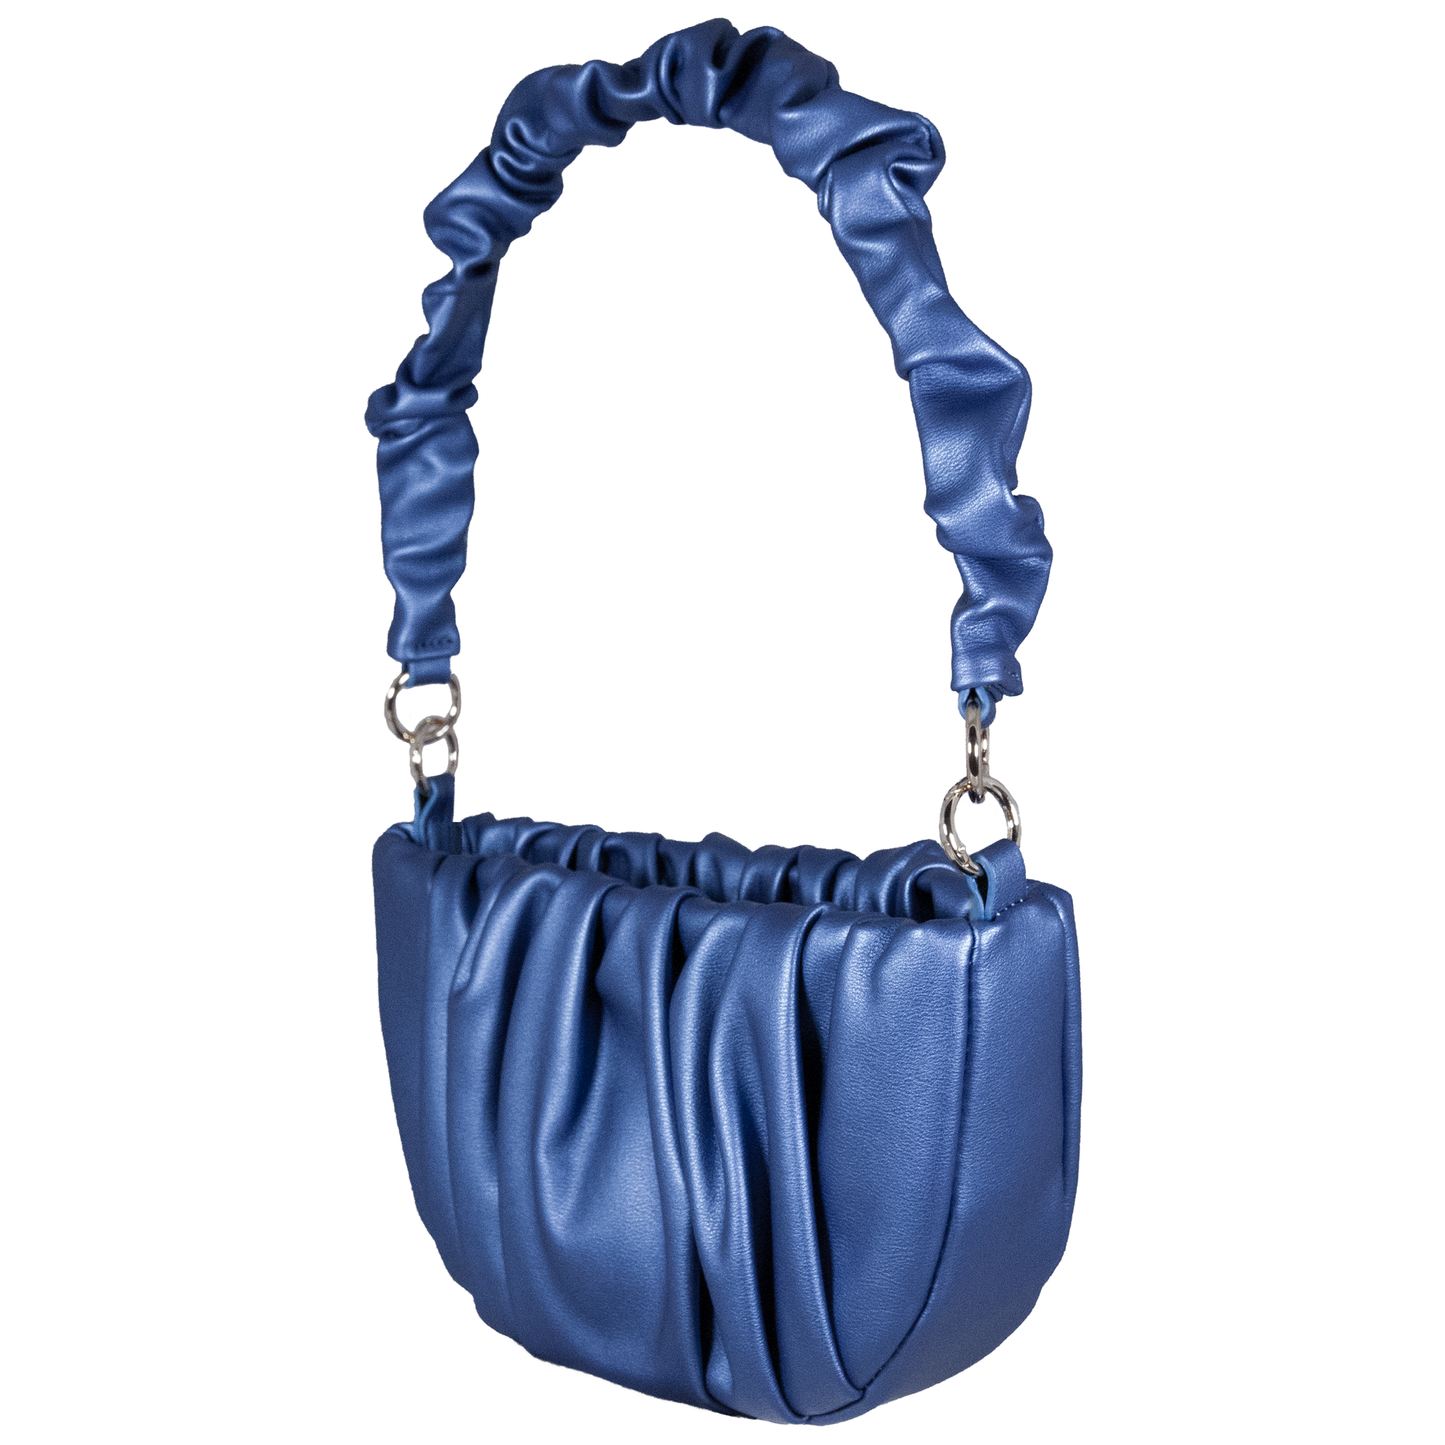 Z022 Women’s Handbag - Blue